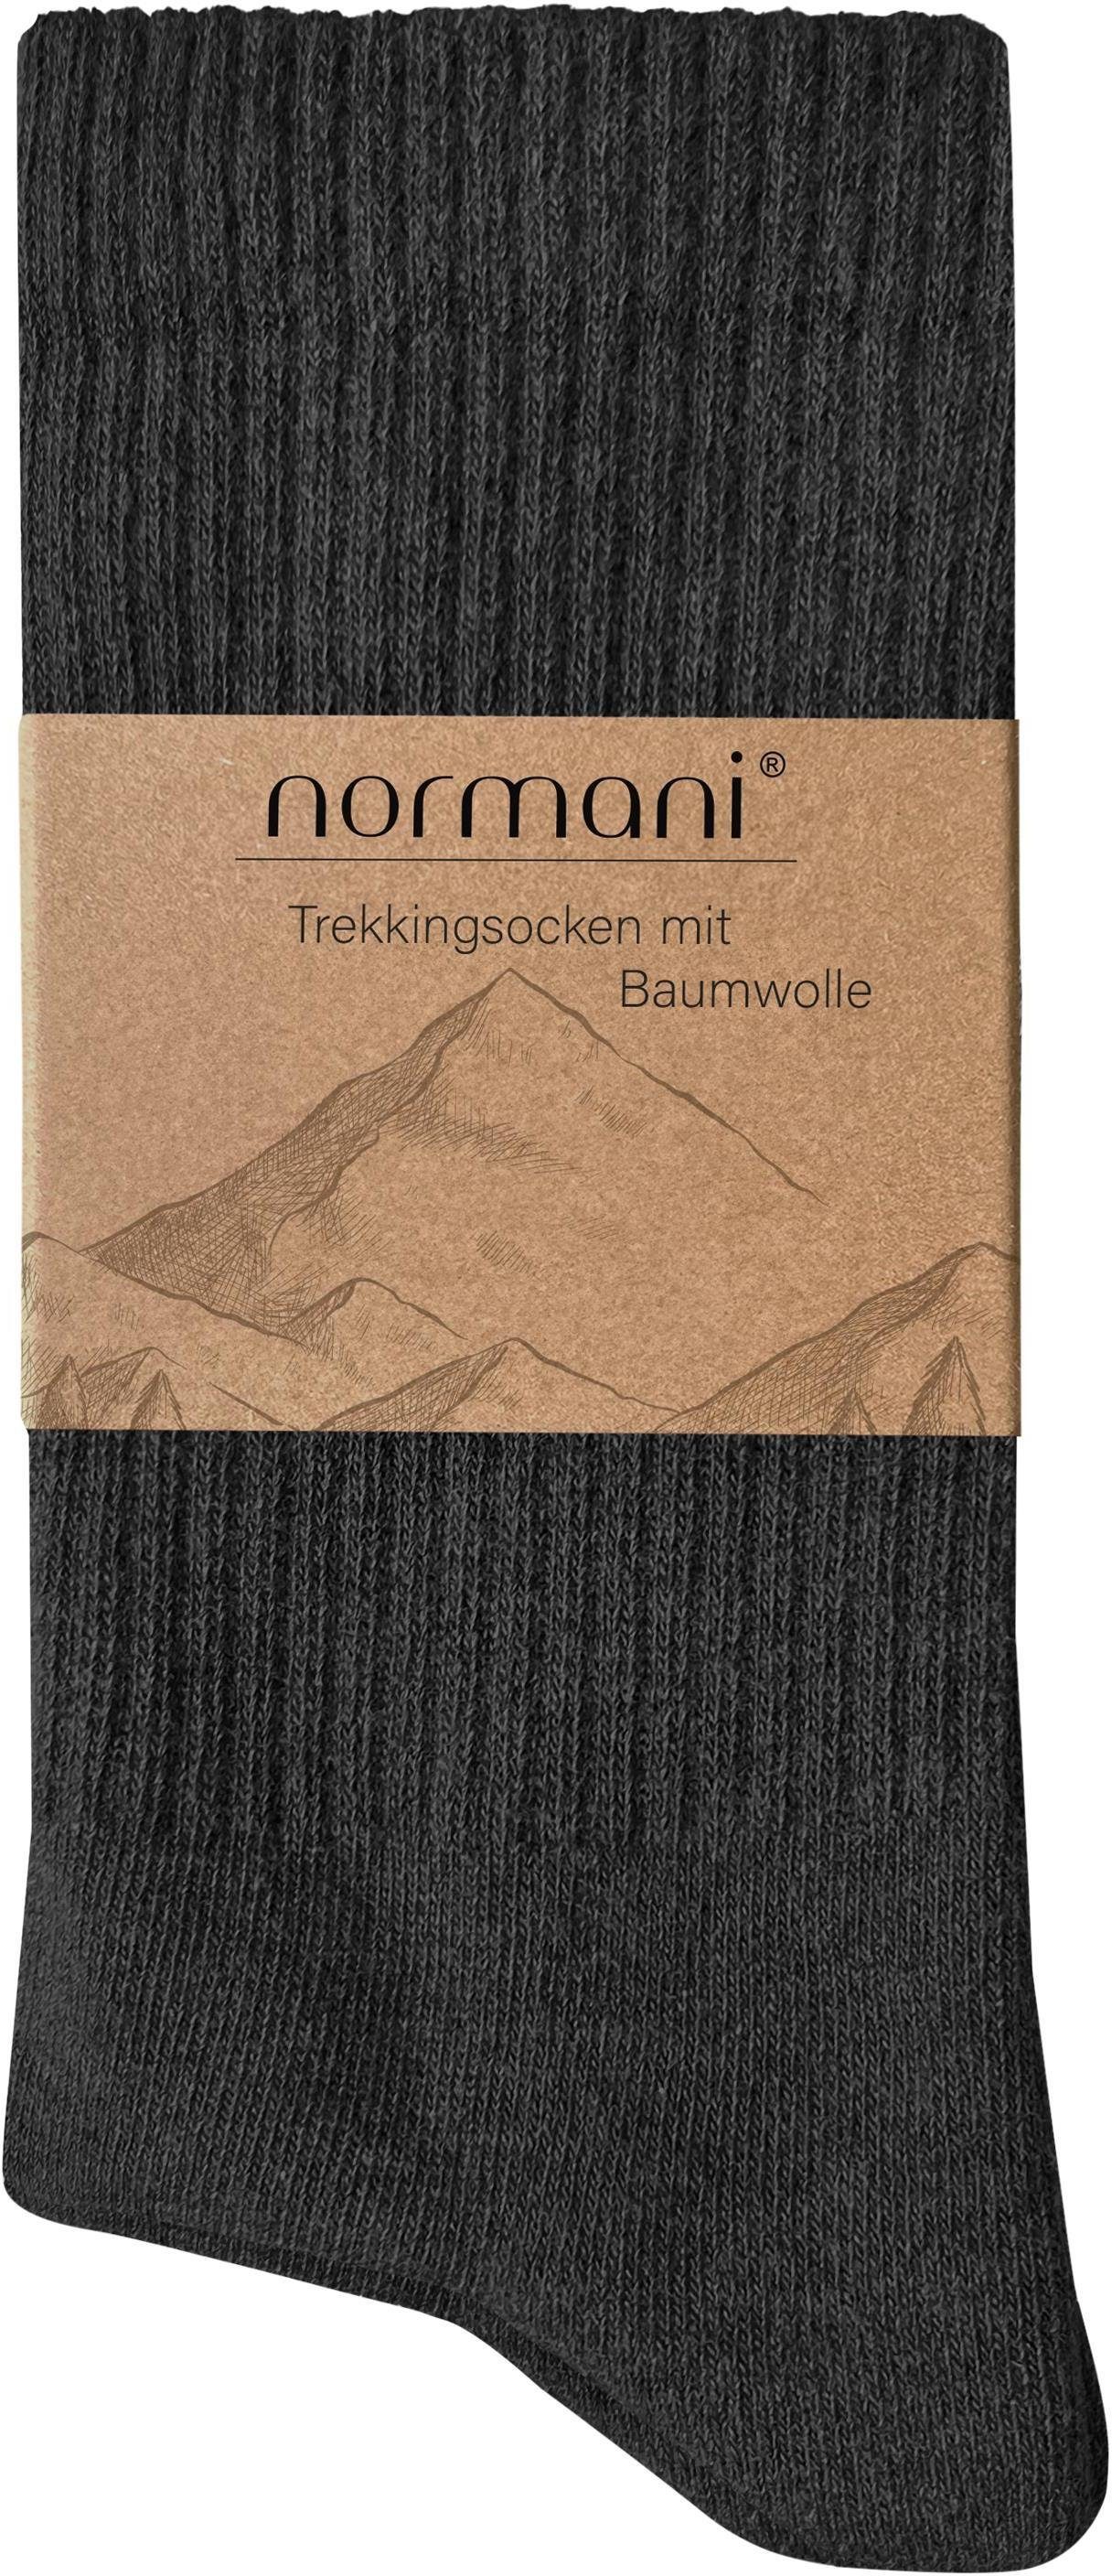 normani Wandersocken (4er-Set, 4 Paar) Gepolsterte Trekkingsocken Wolle -Atmungsaktiv Anthrazit aus